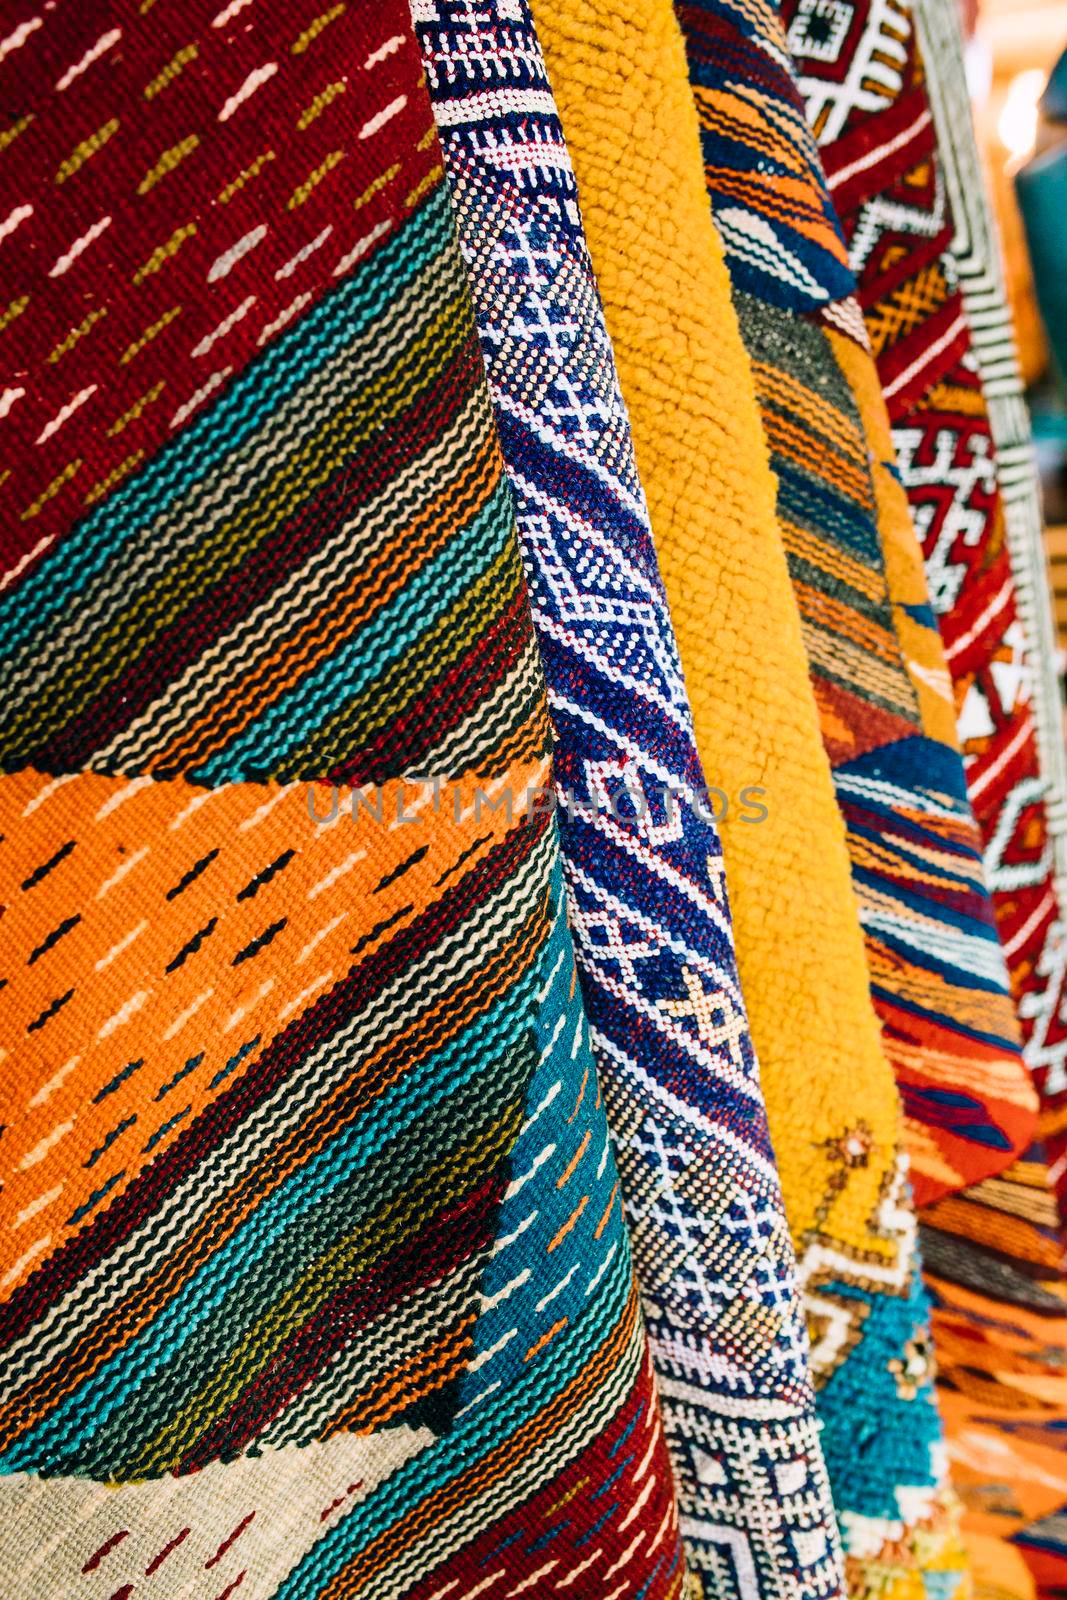 carpets market morocco. High quality photo by Zahard